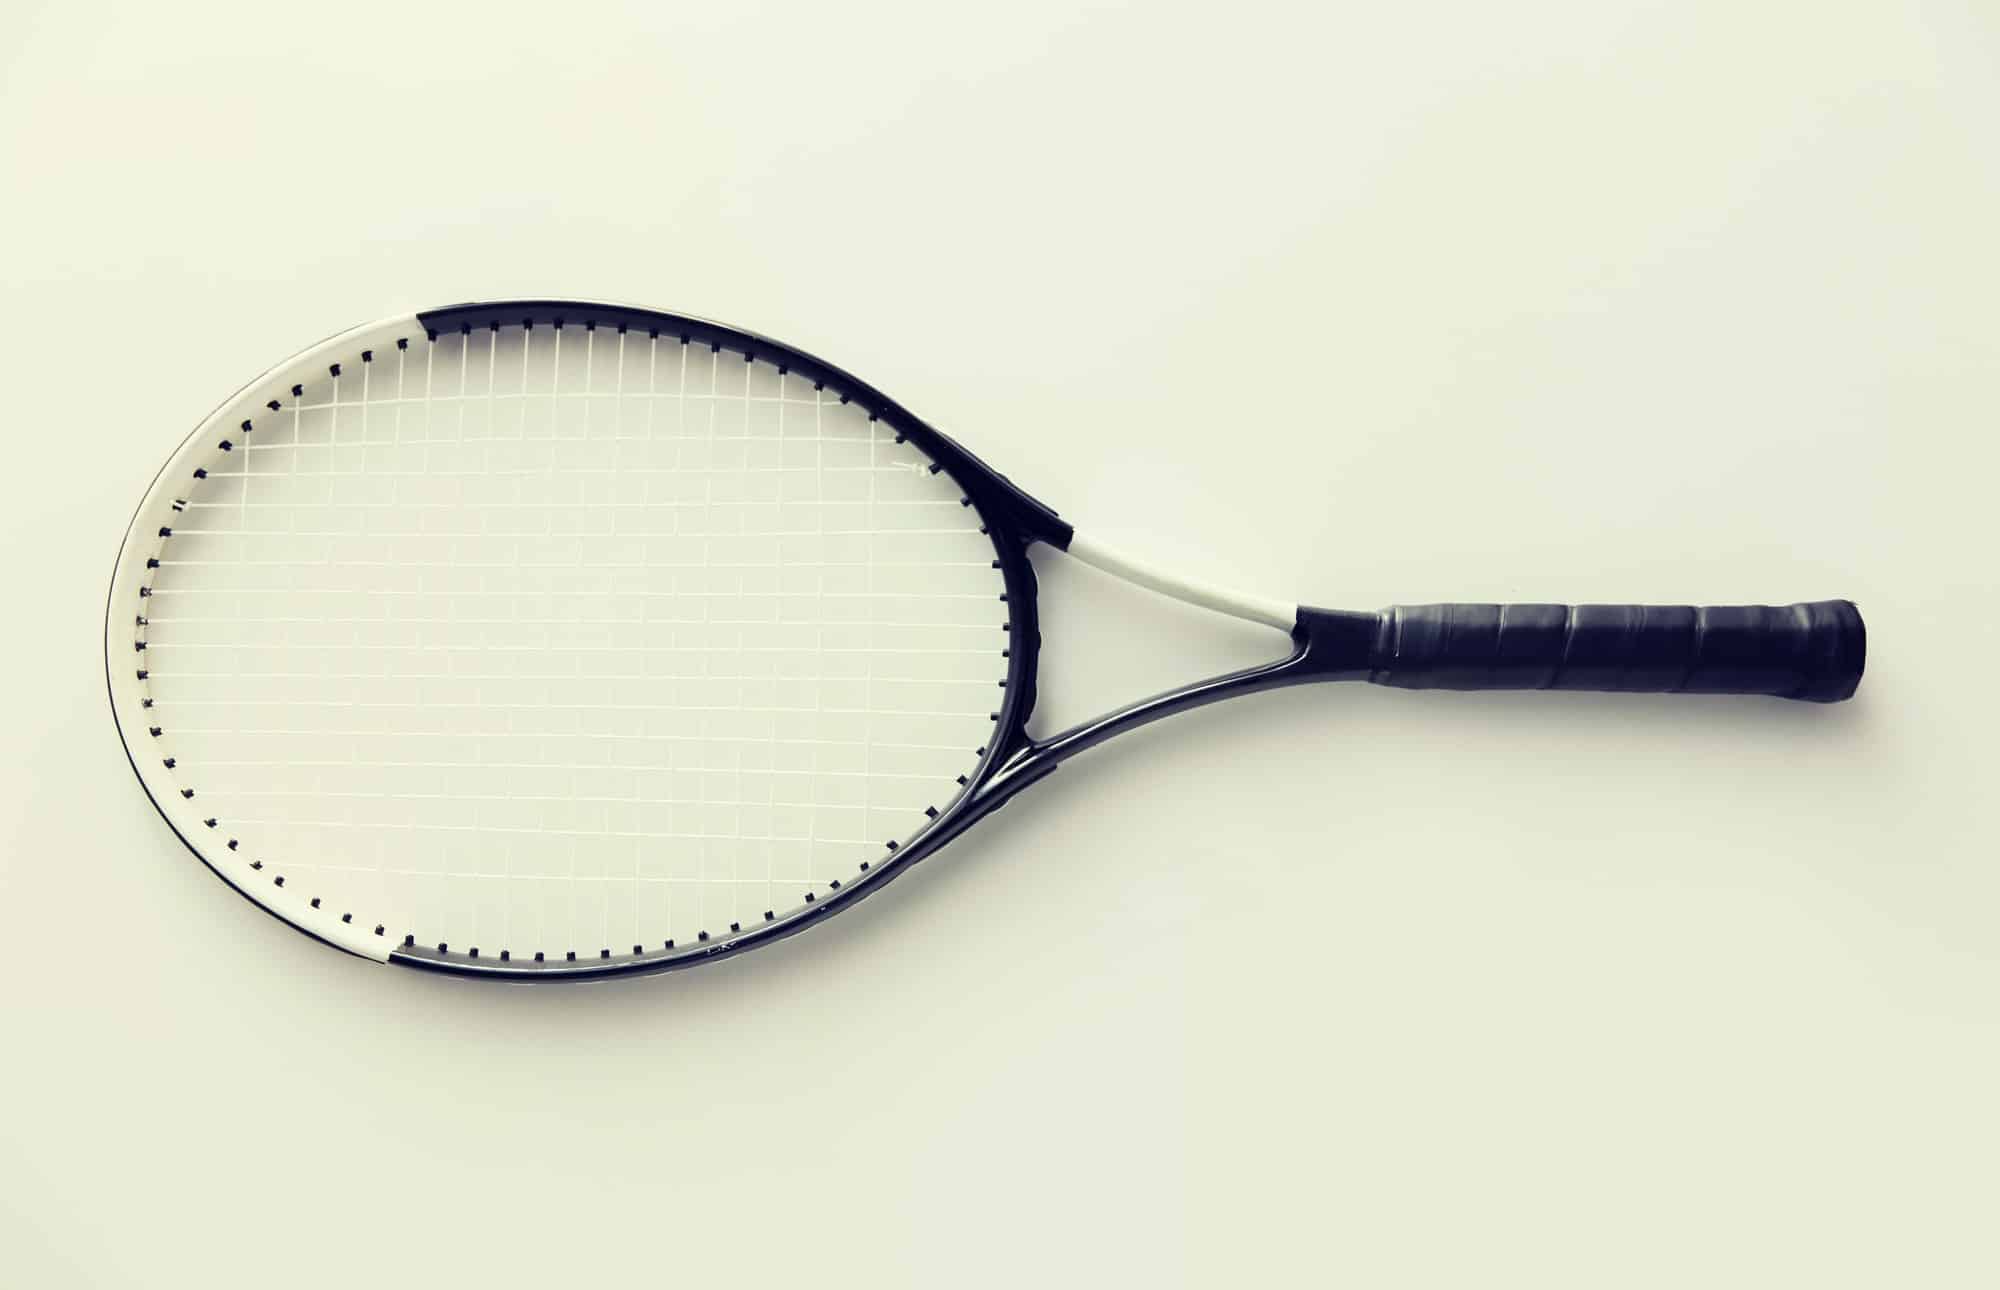 close up of tennis racket